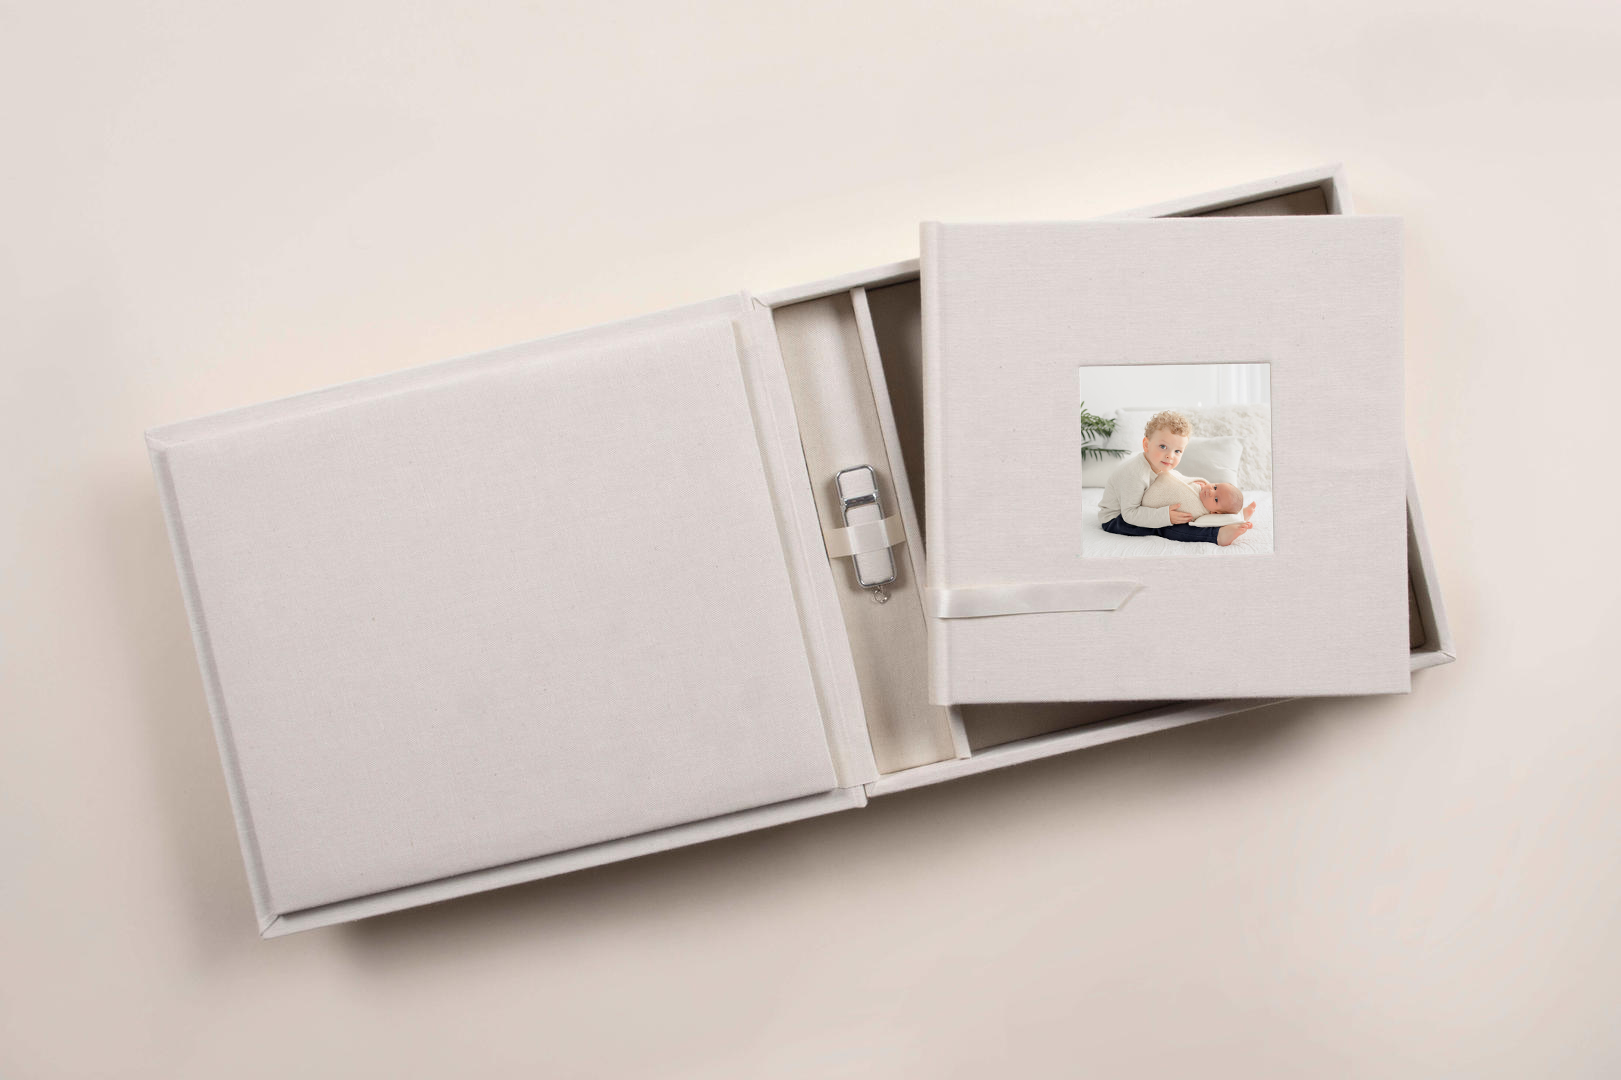 Linen Album with newborn image on front designed by san diego newborn photographer